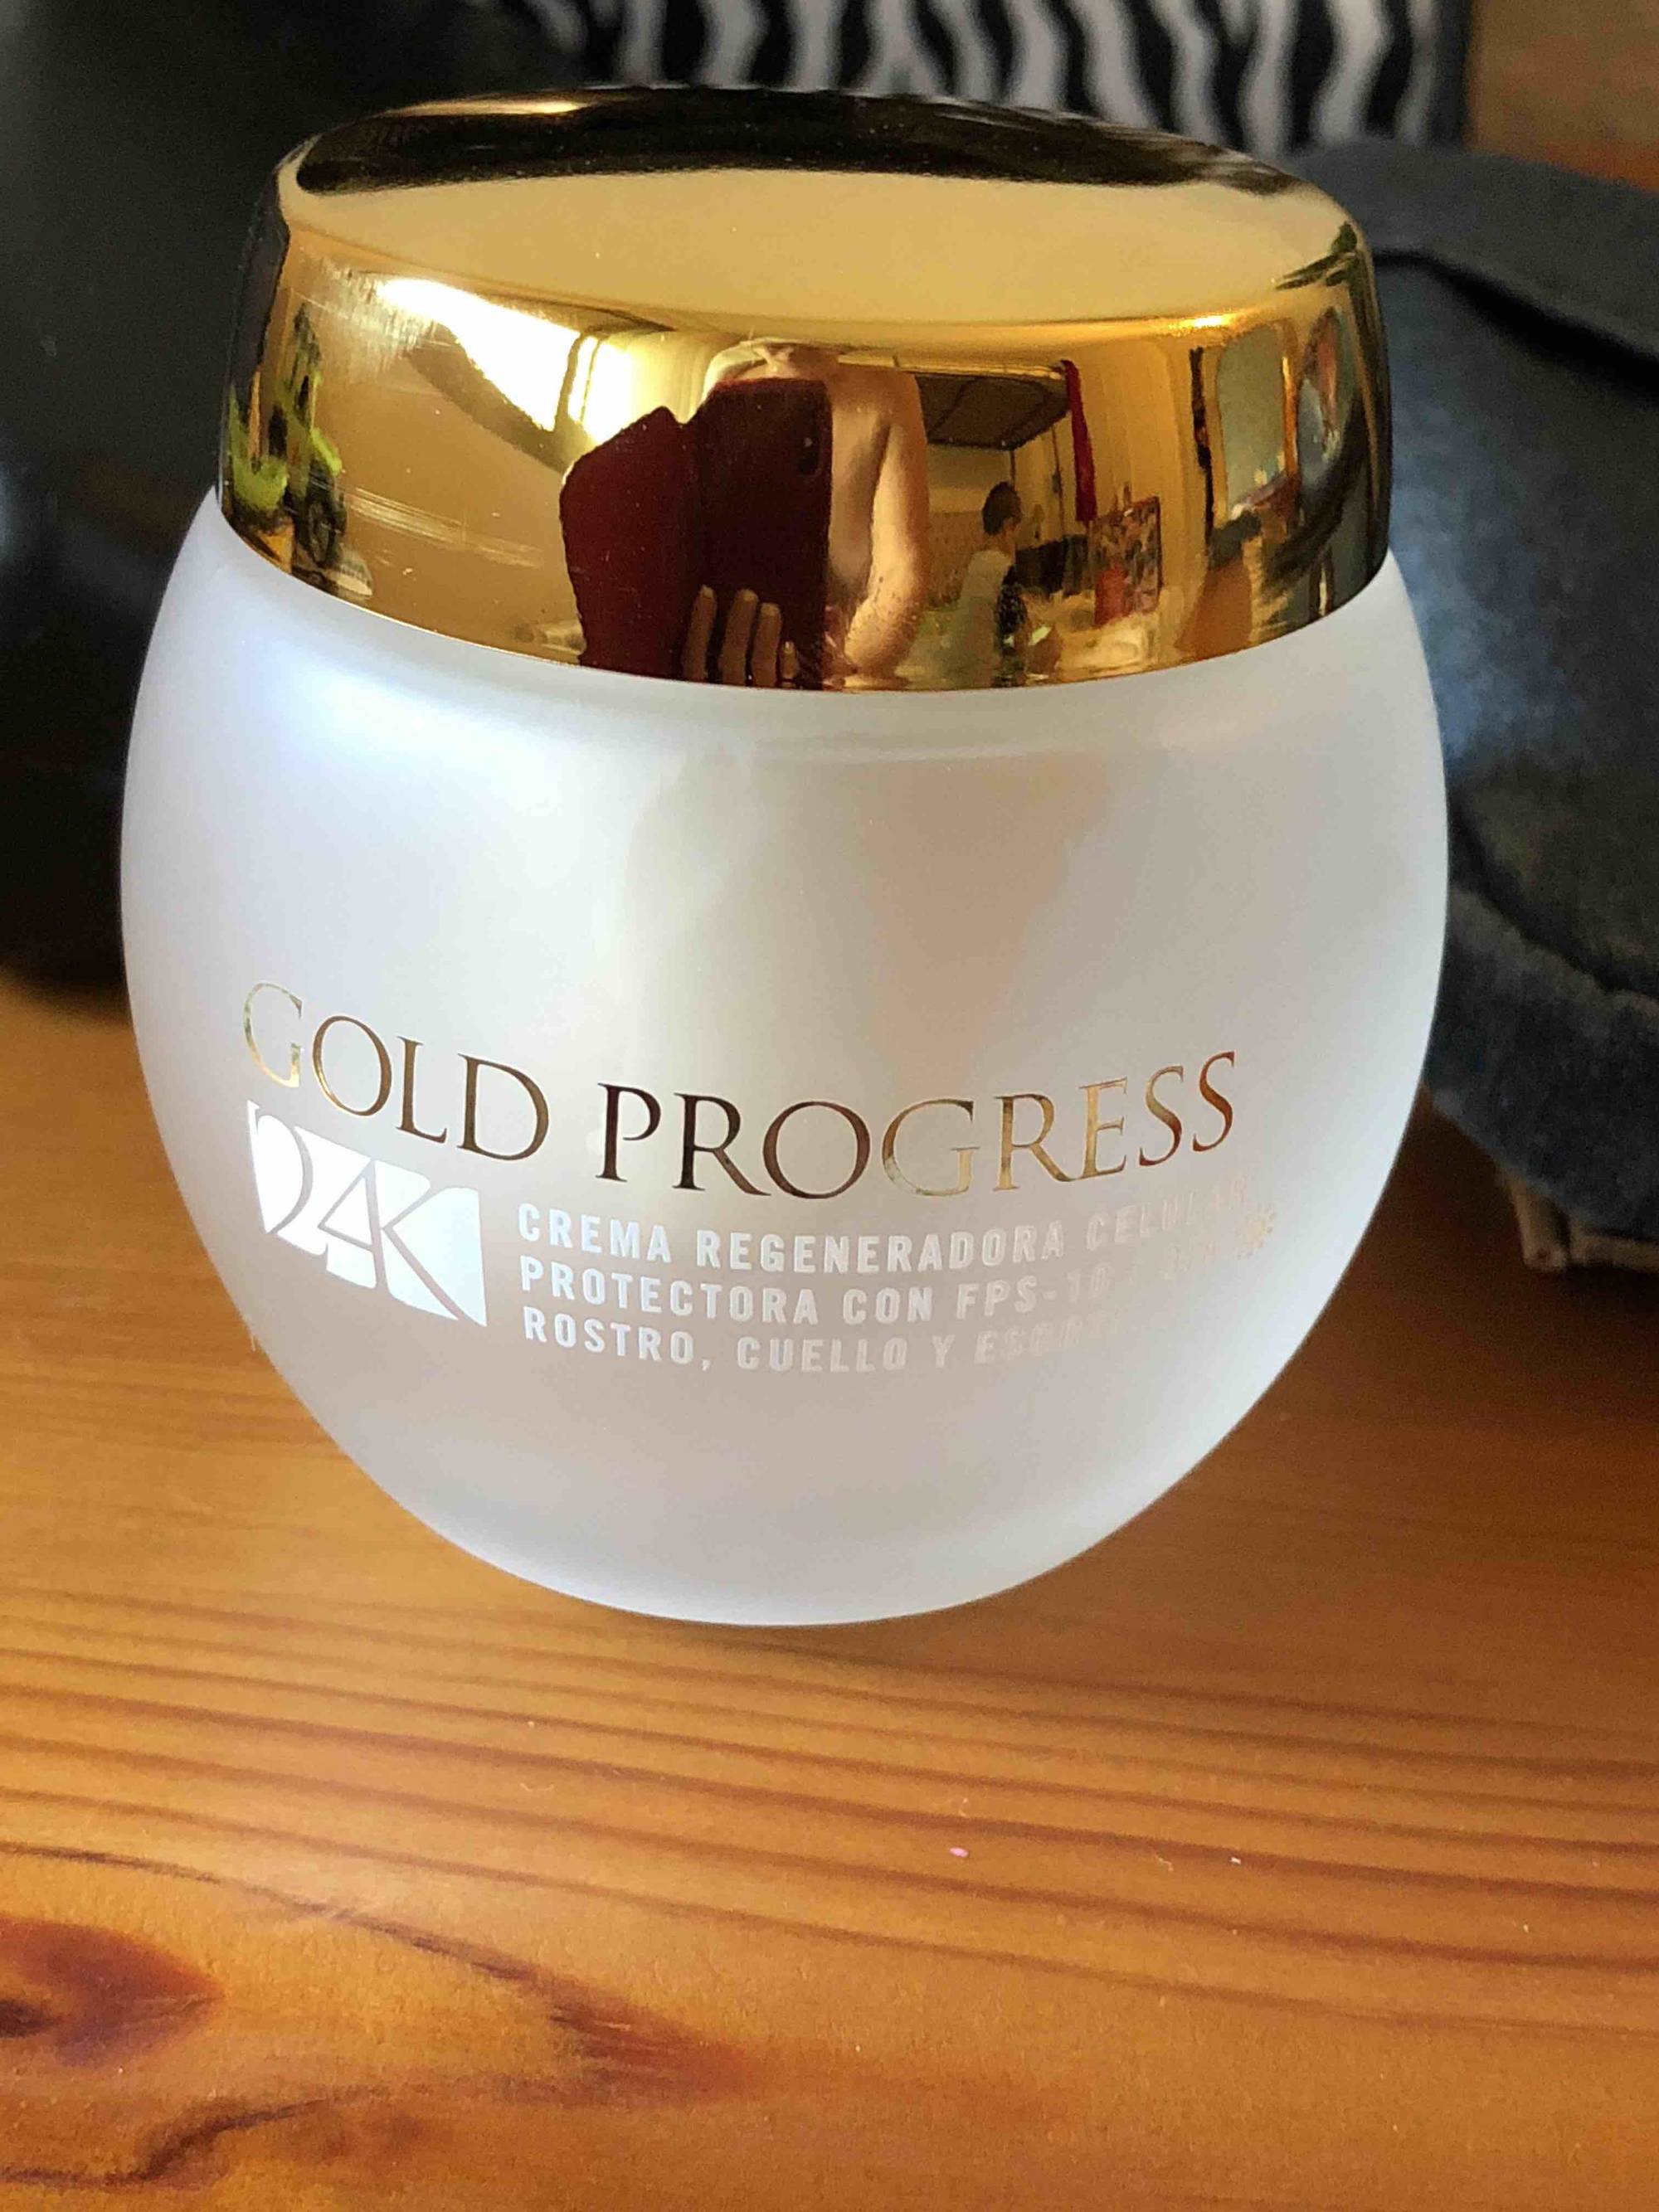 DELIPLUS - 24K Gold progress - Crema regenerador celular